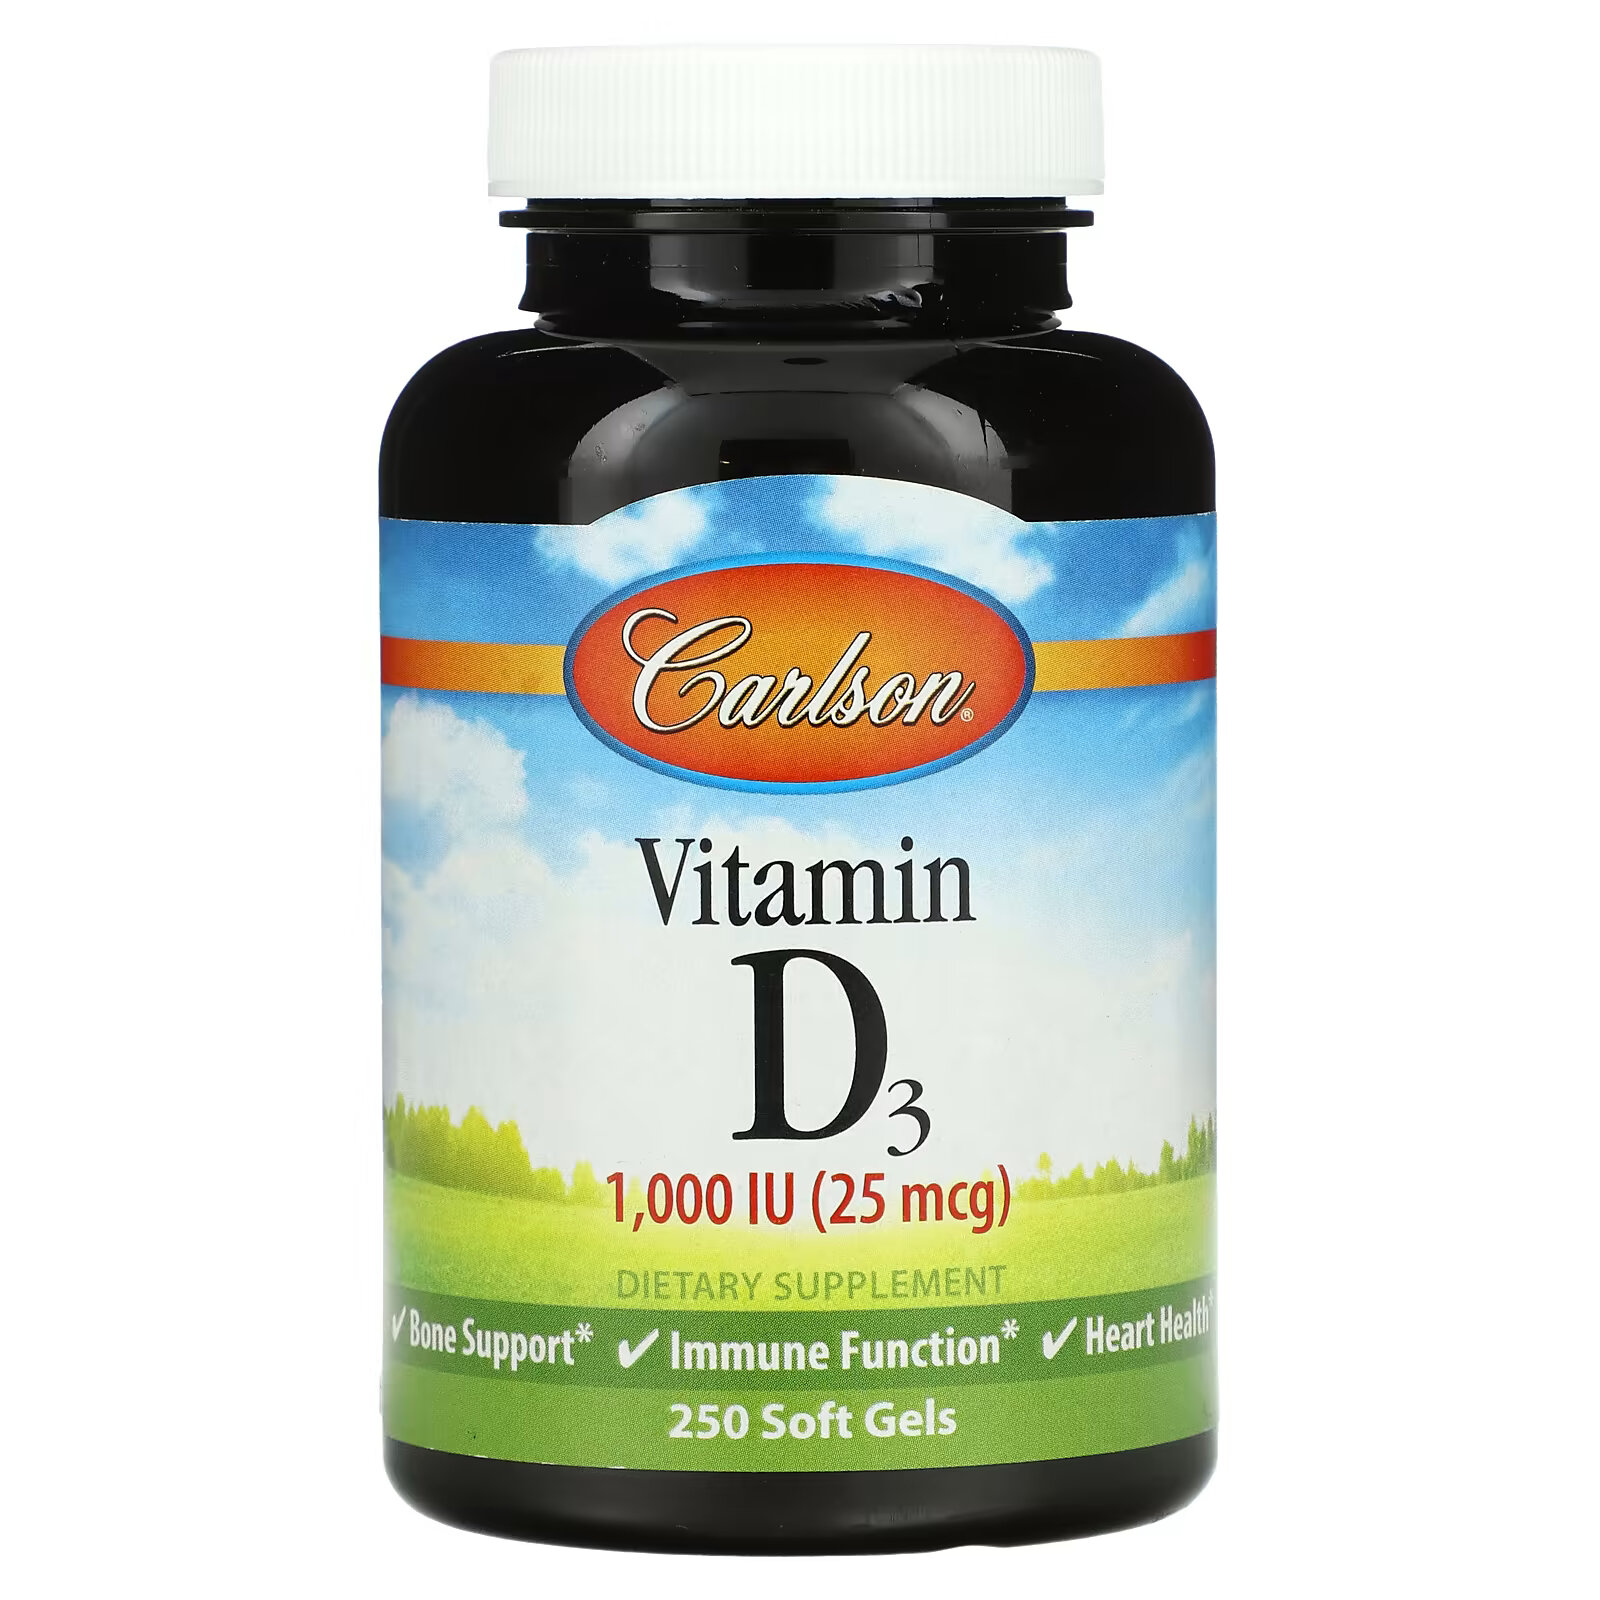 Carlson, Витамин D3, 1000 МЕ (25 мкг), 250 мягких таблеток 21st century витамин d3 25 мкг 1000 ме 250 мягких таблеток с быстрым высвобождением